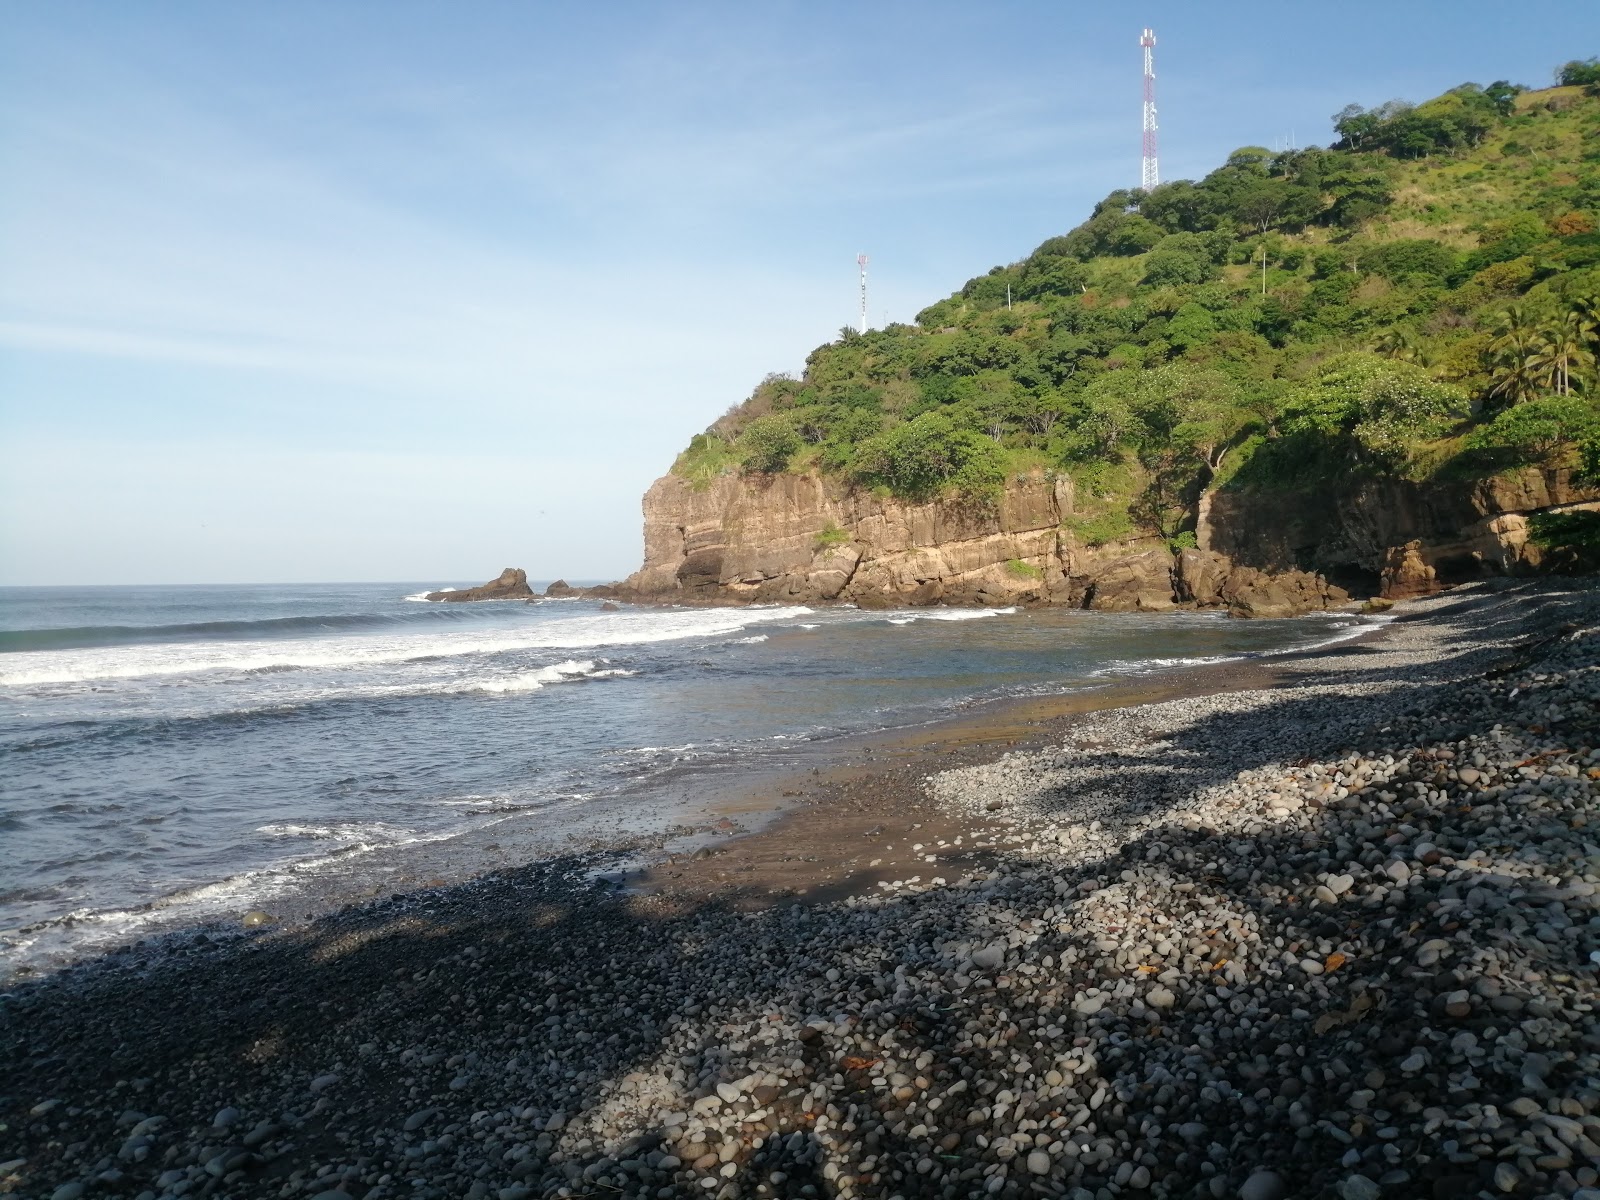 Photo of La Perla beach with gray pebble surface